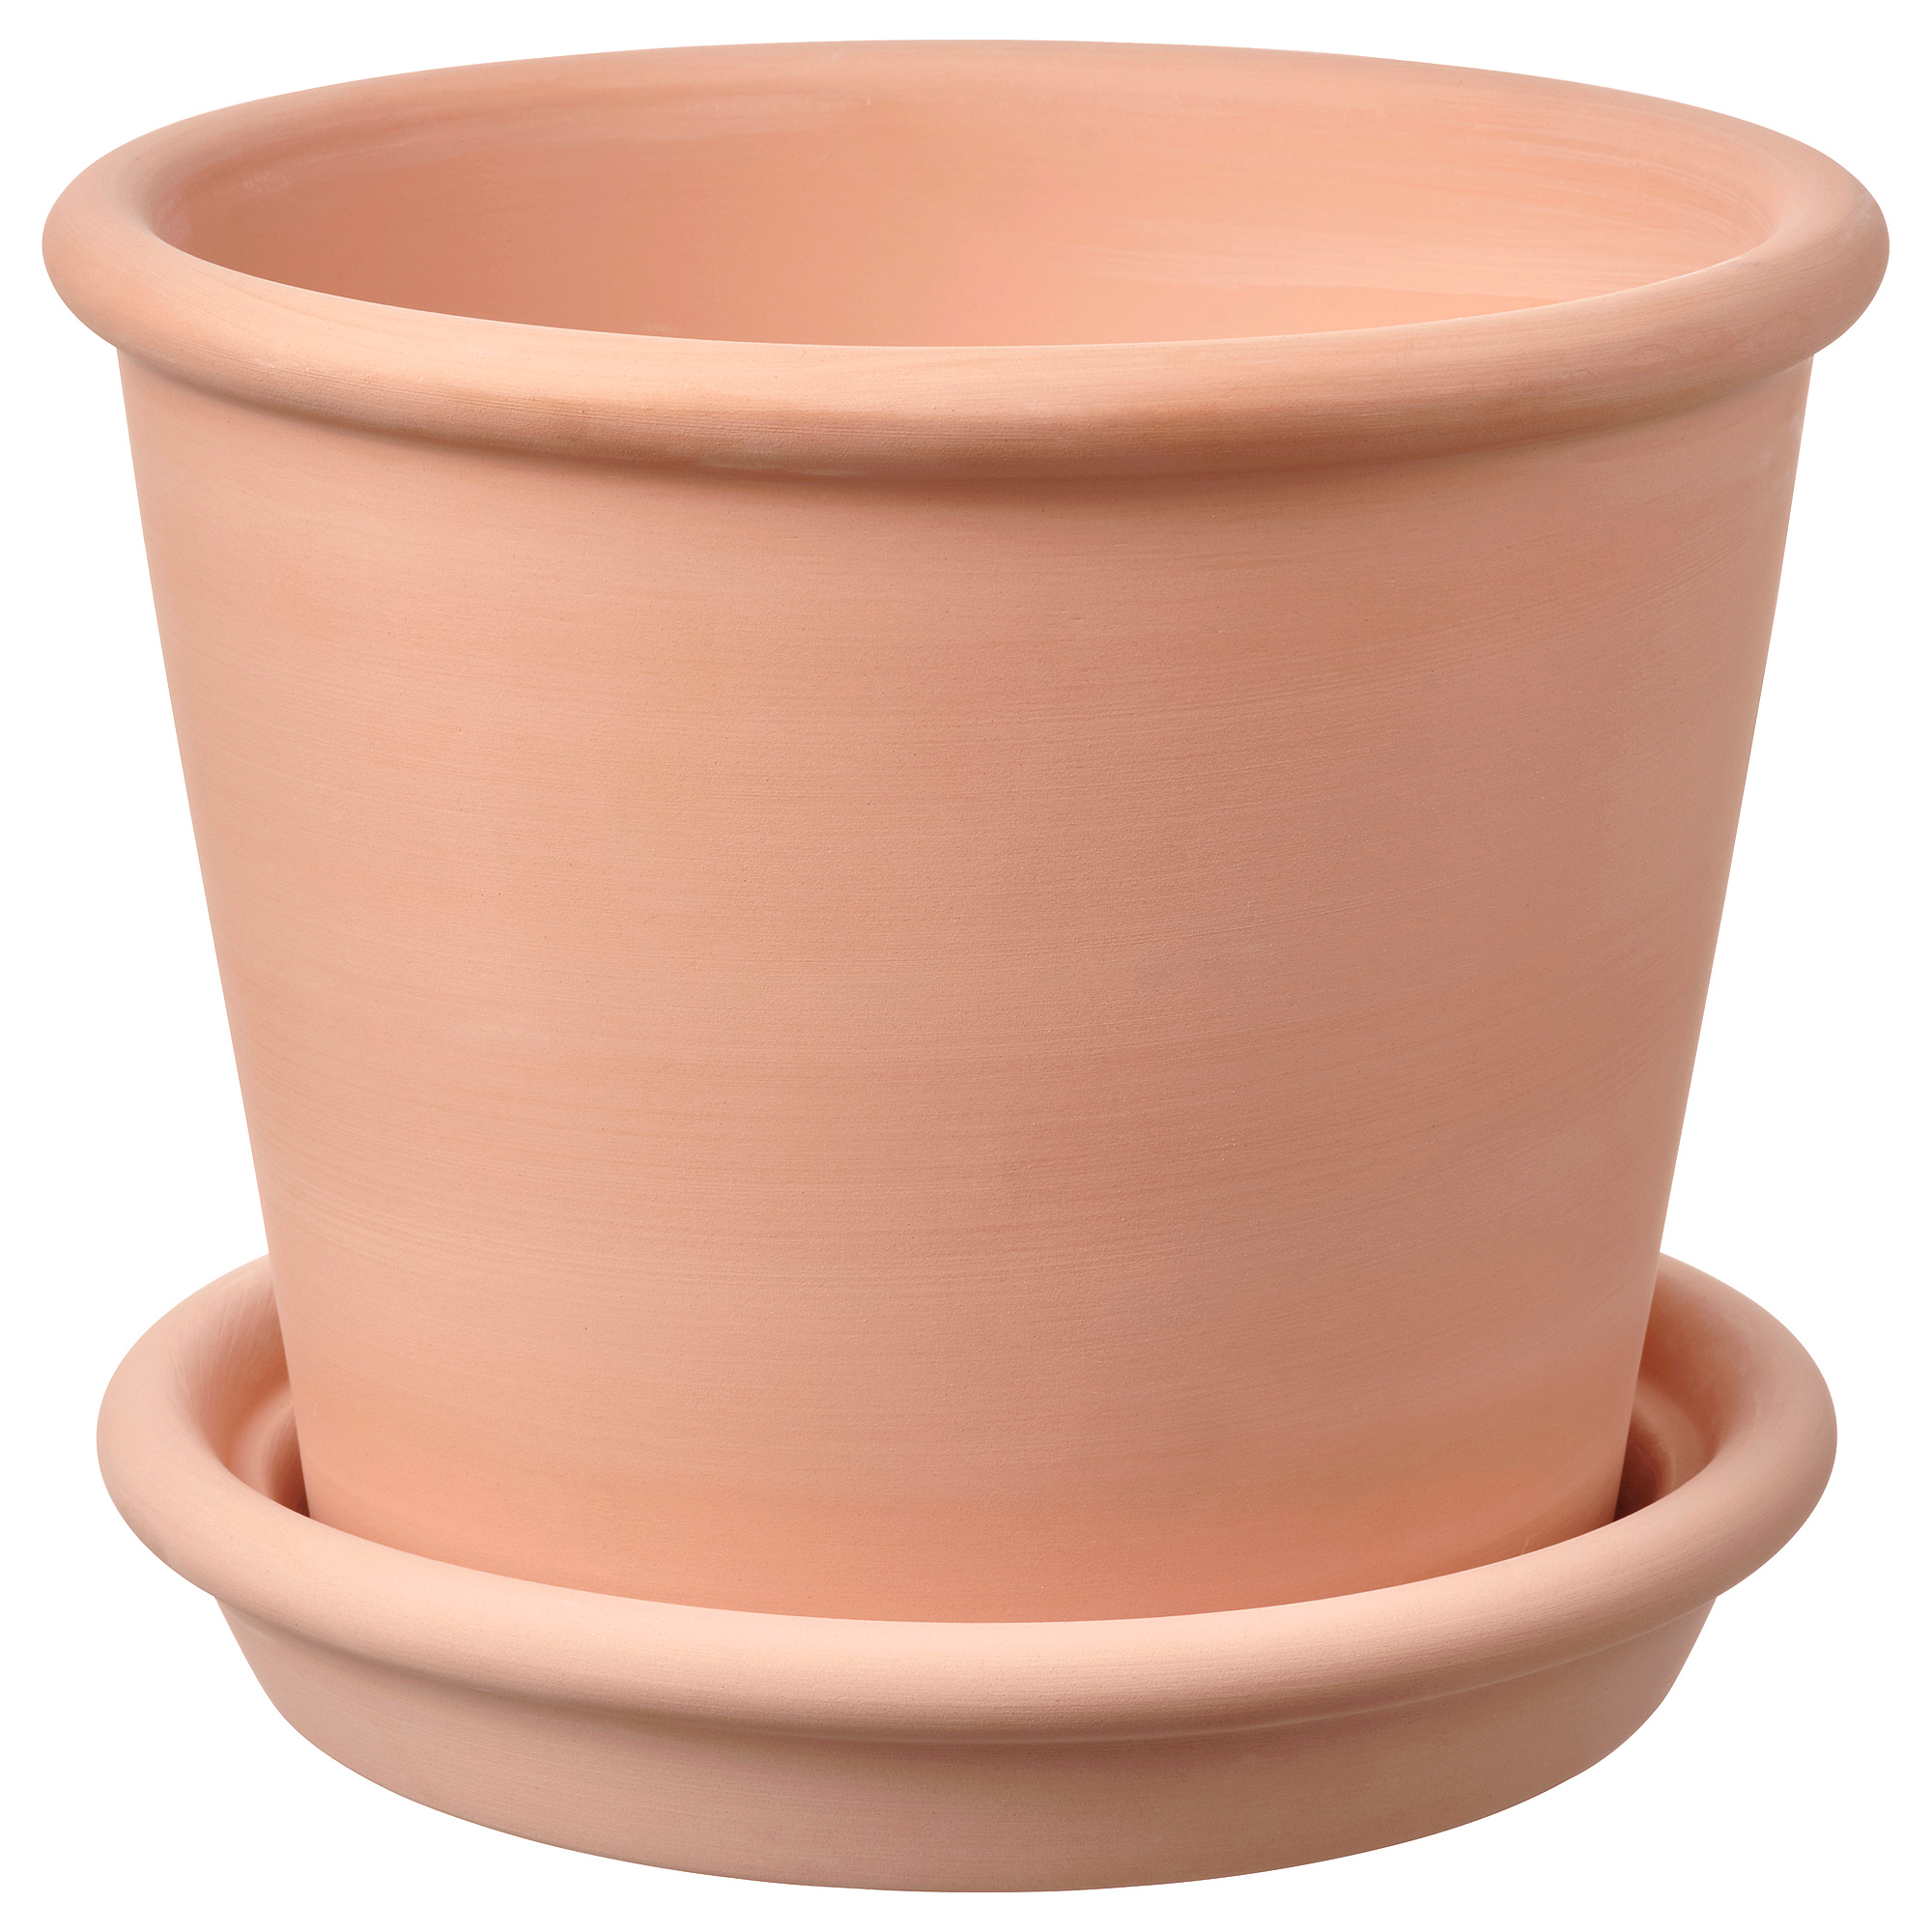 MUSKOTBLOMMA plant pot with saucer